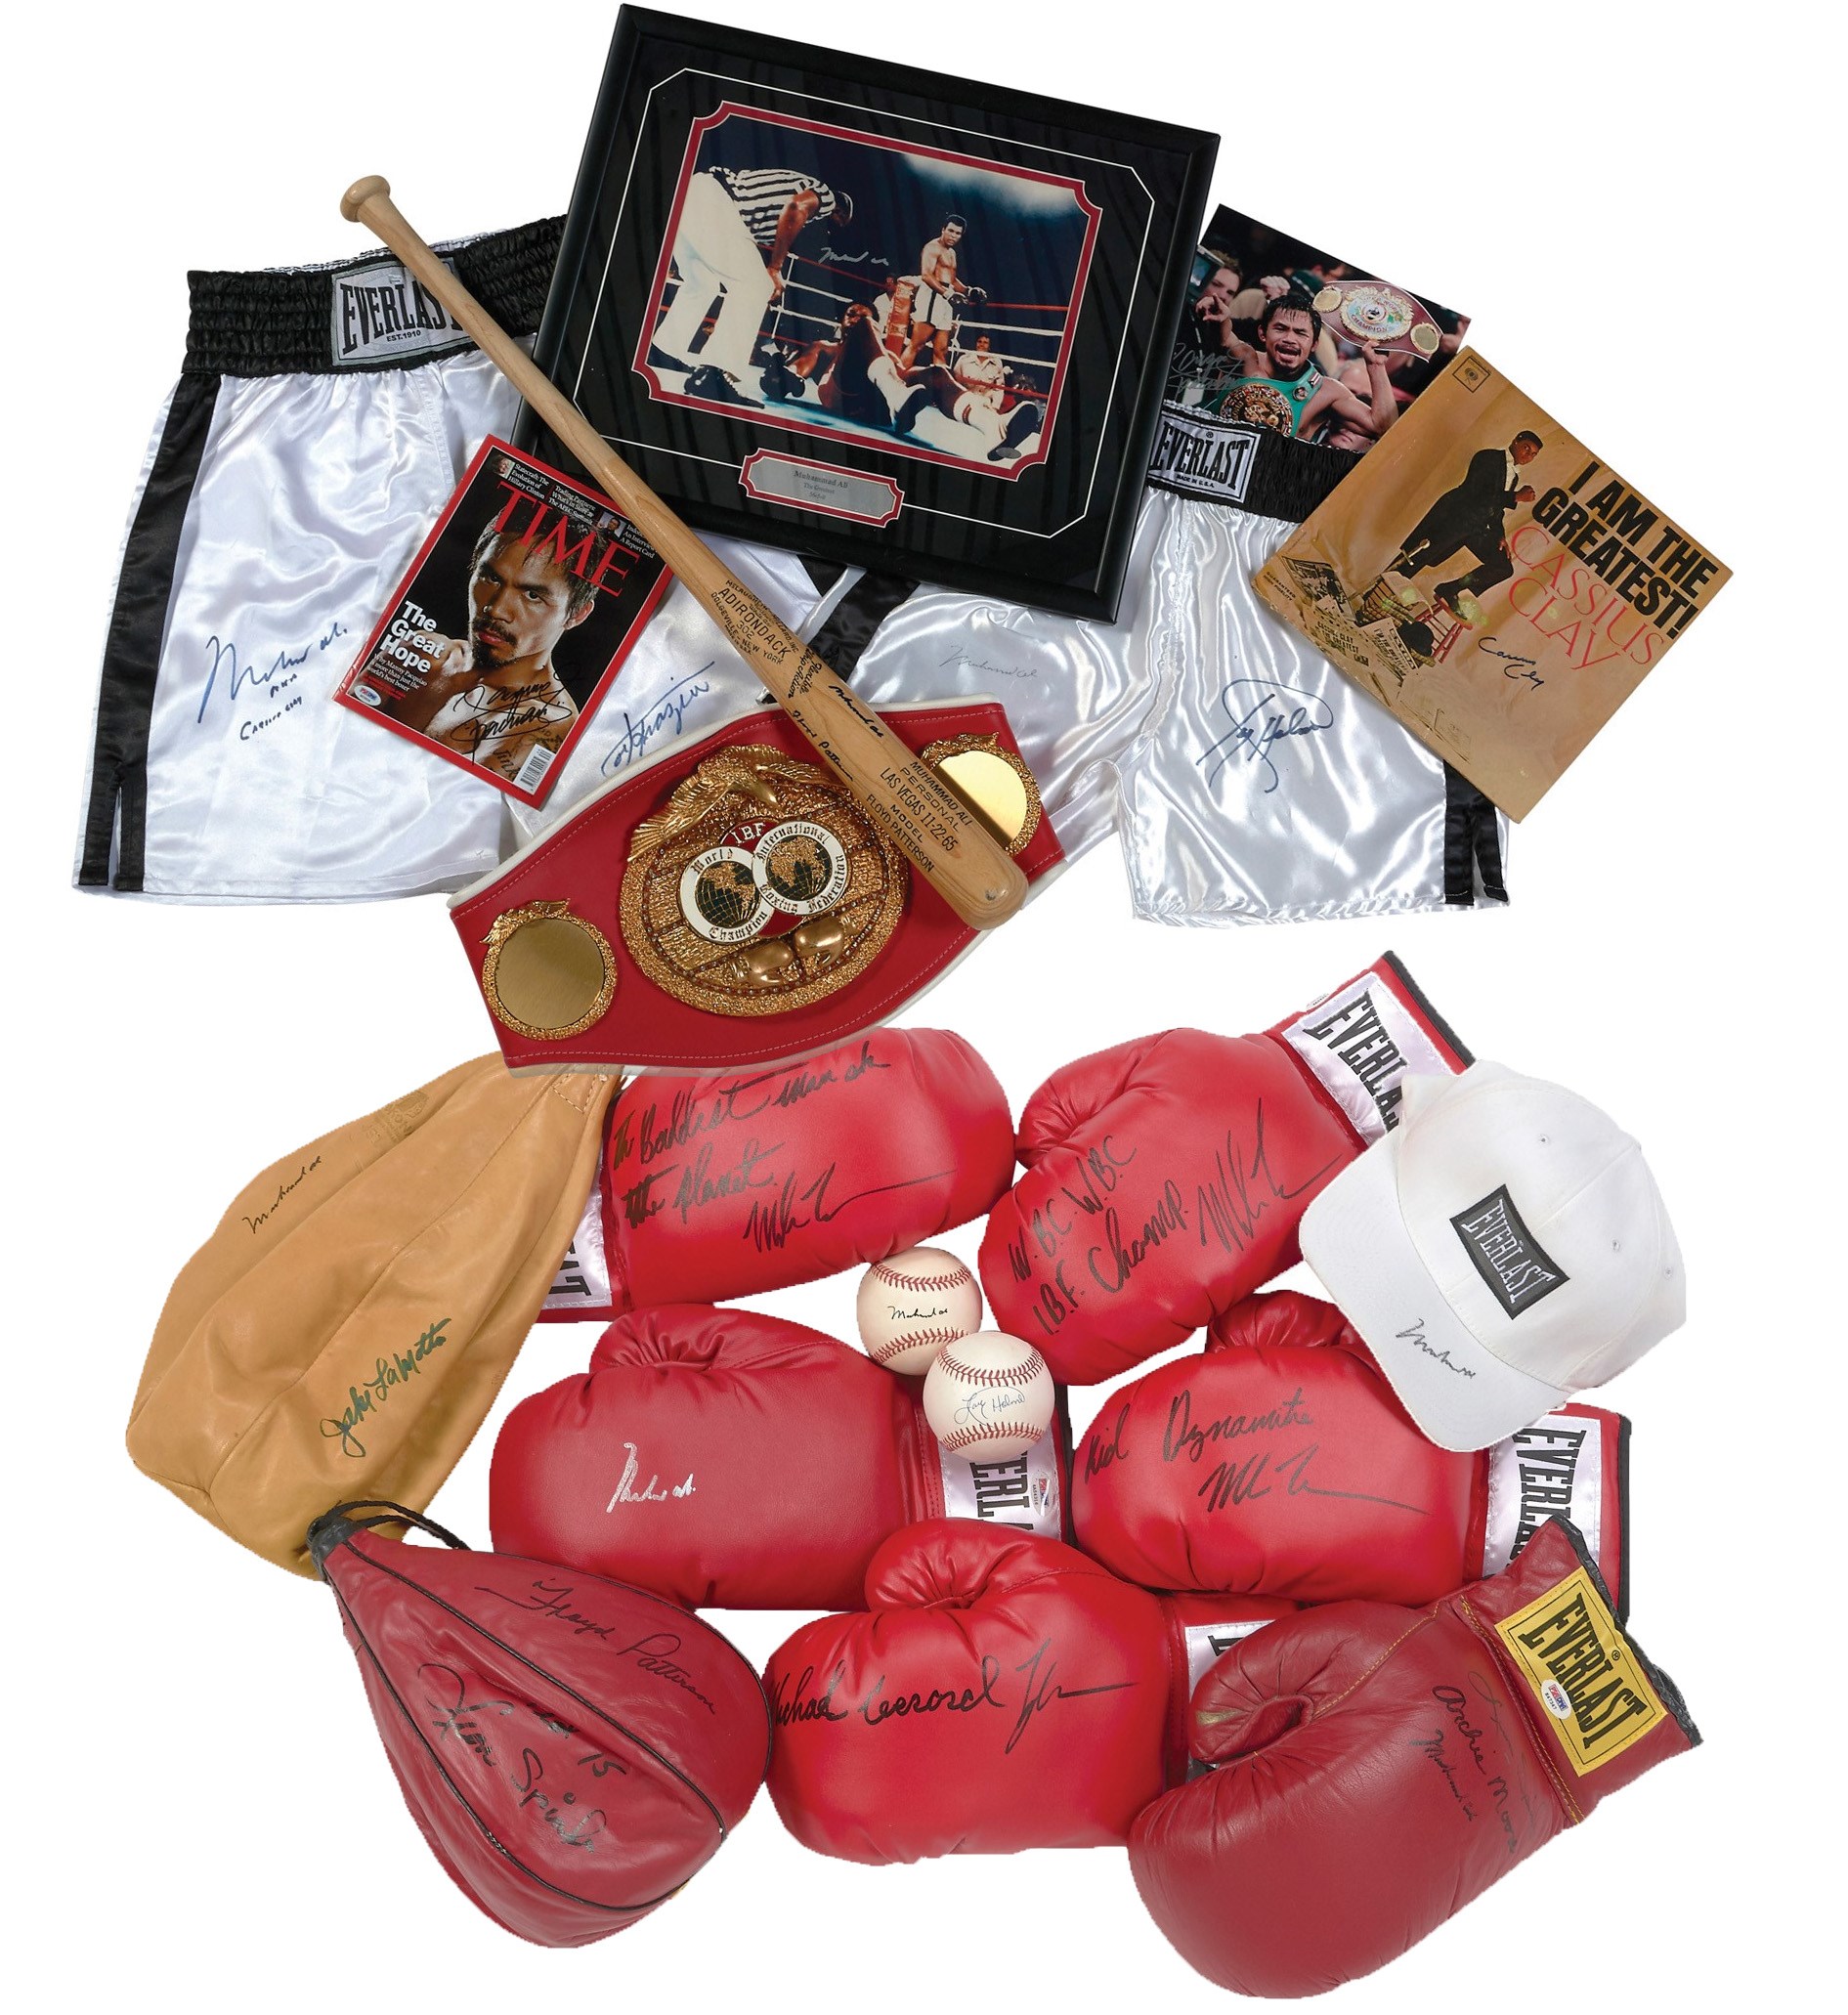 Muhammad Ali & Boxing - Muhammad Ali & Boxing Legends Autograph Collection (19)